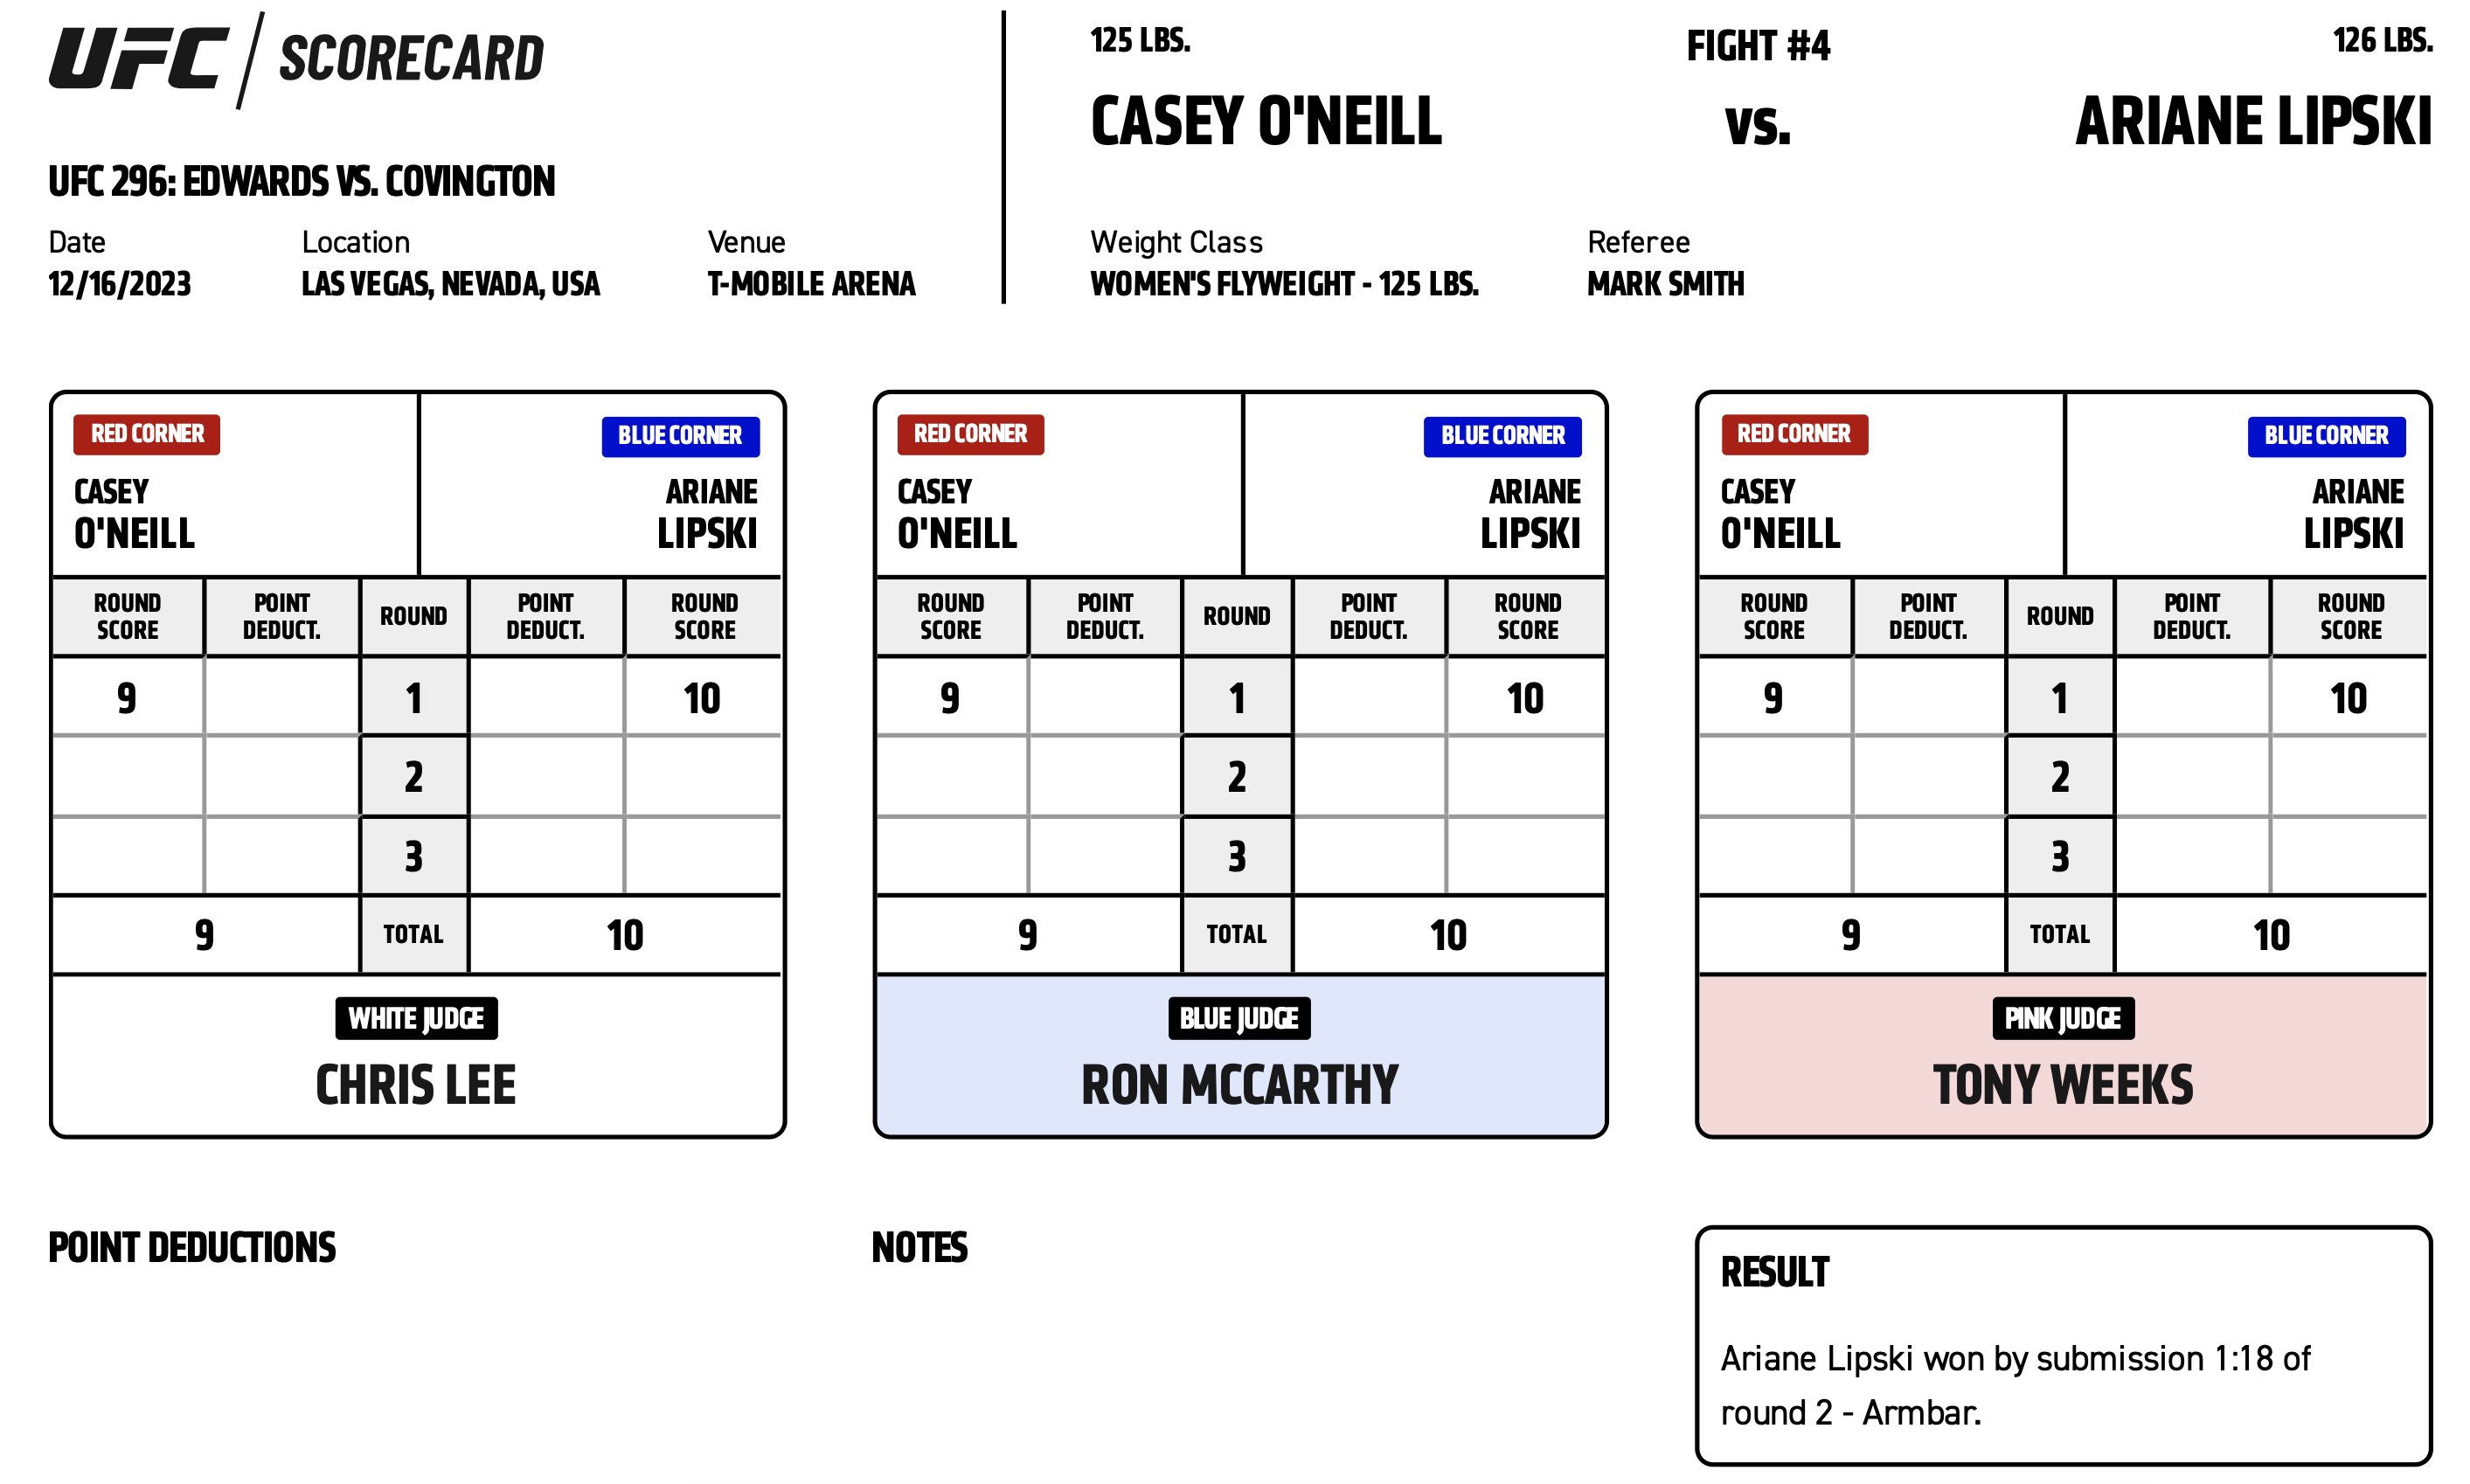 Scorecard : UFC 296 - Casey O'Neill vs Ariane Lipski